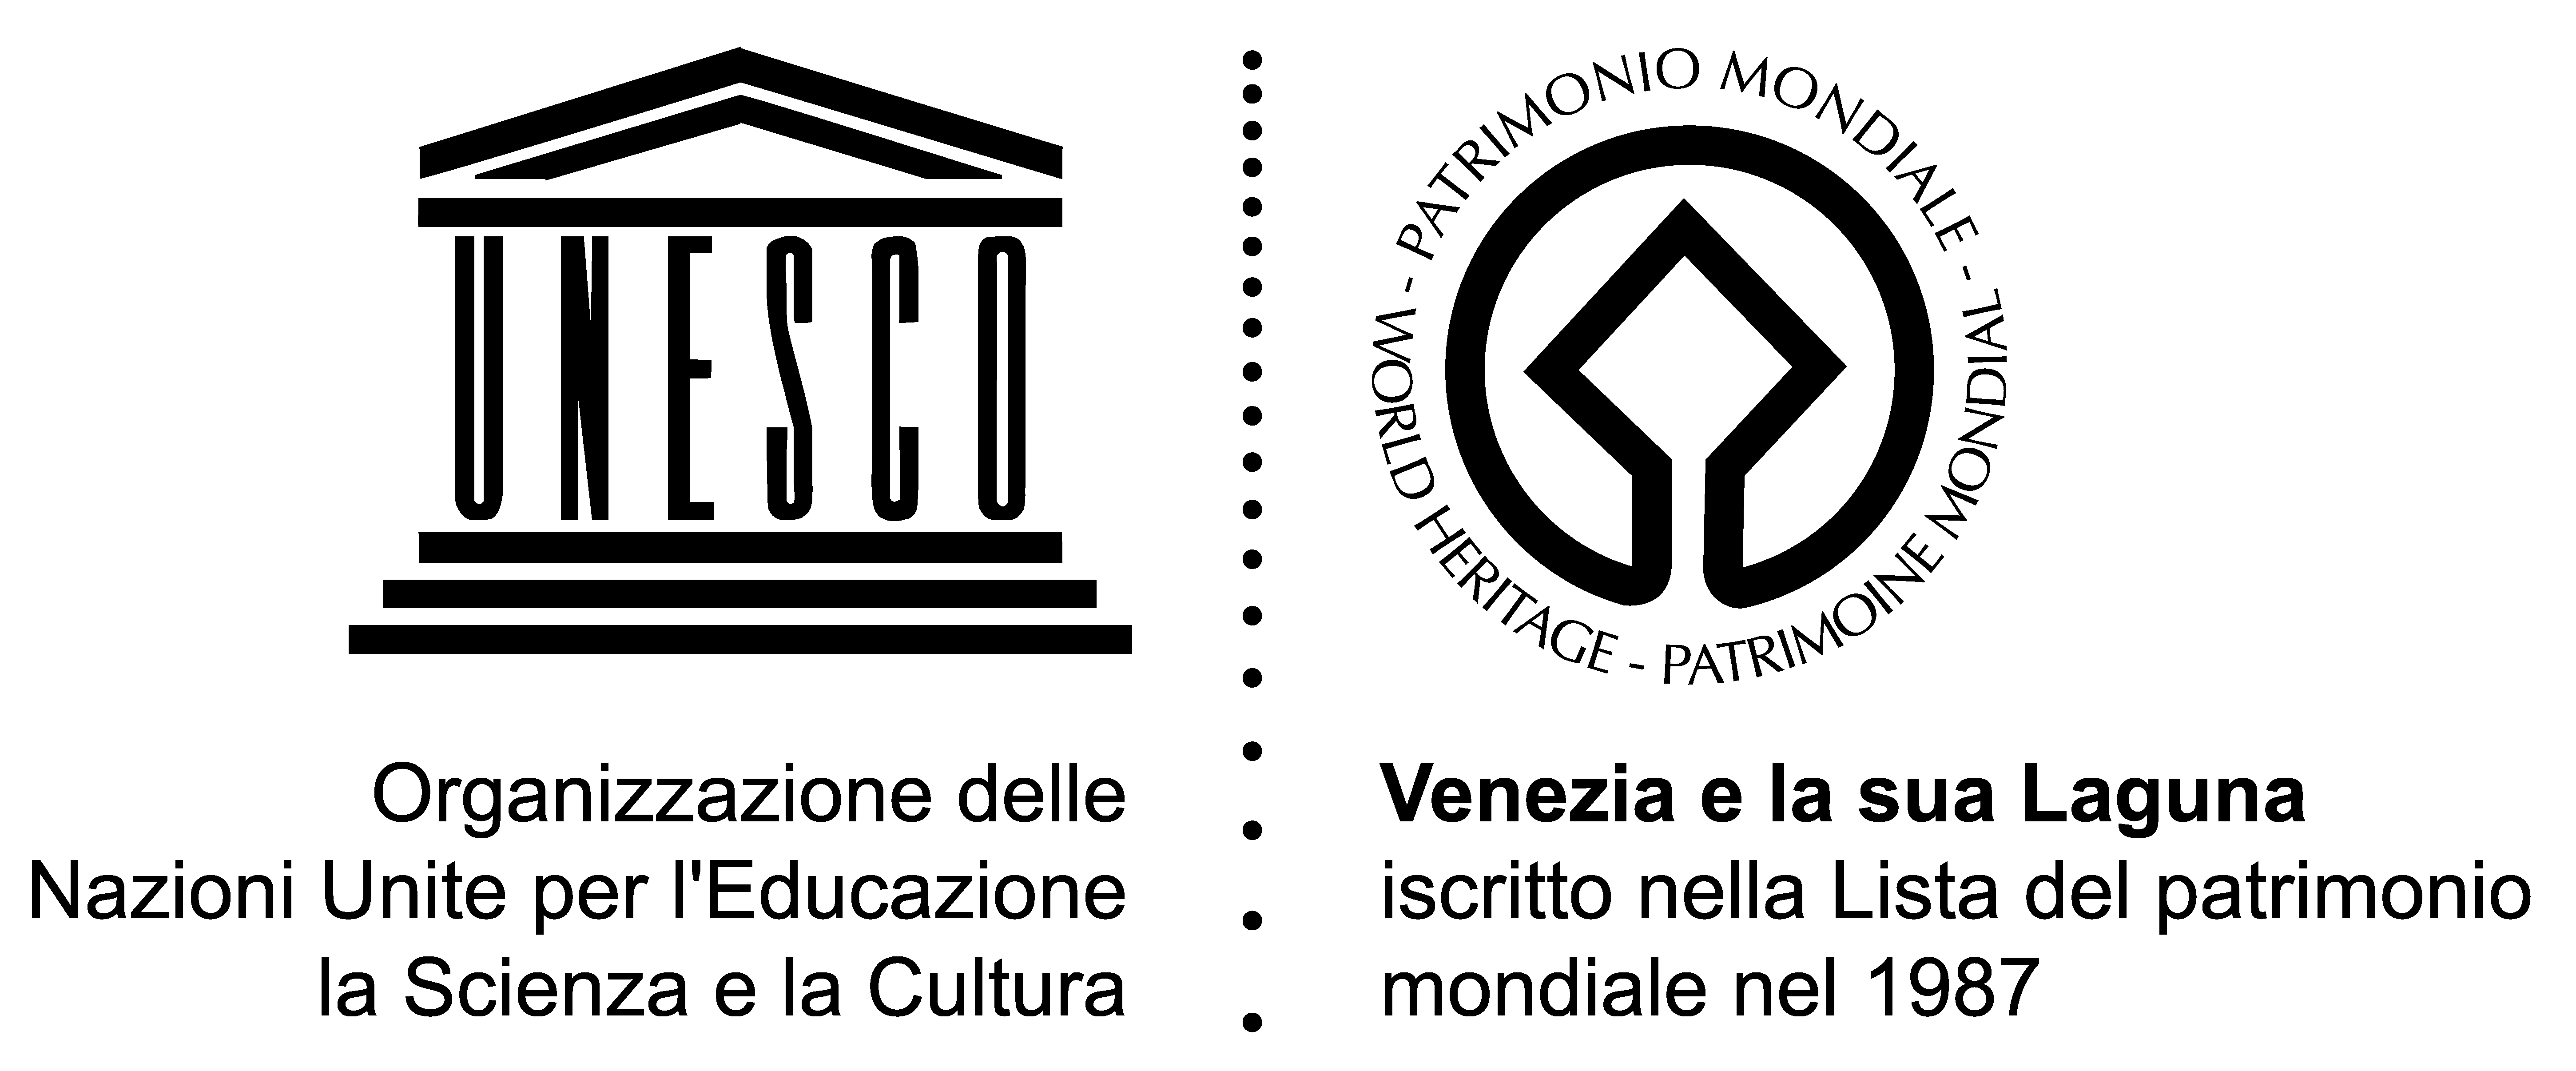 UNESCO Logo - Venice and its Lagoon